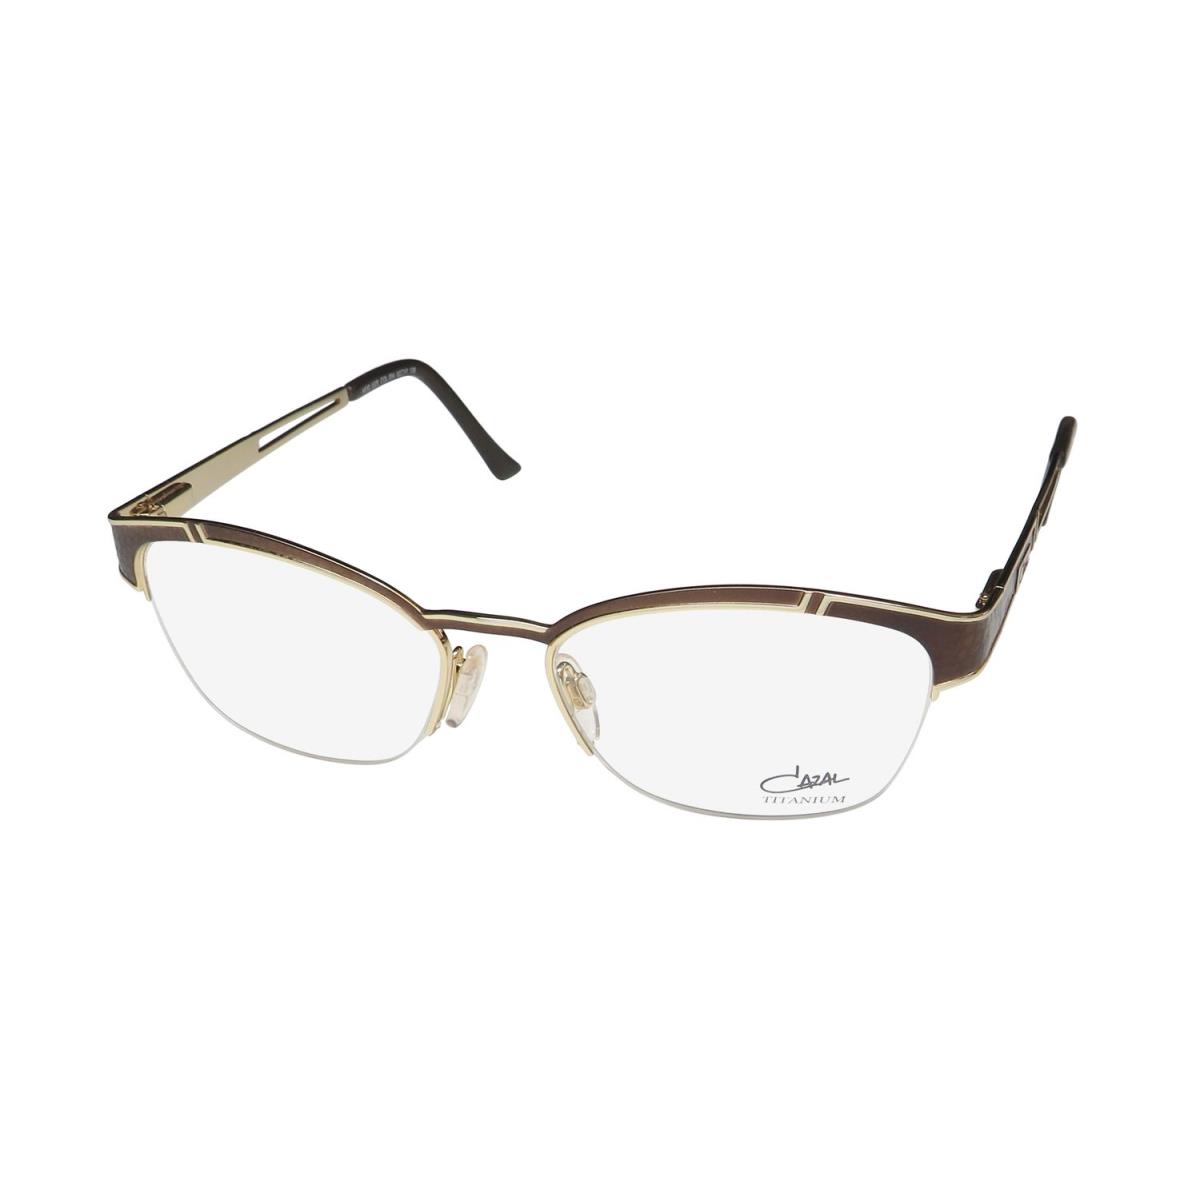 Cazal 1229 Cat Eye Titanium Made IN Germany Hot Eyeglass Frame/glasses Brown / Gold